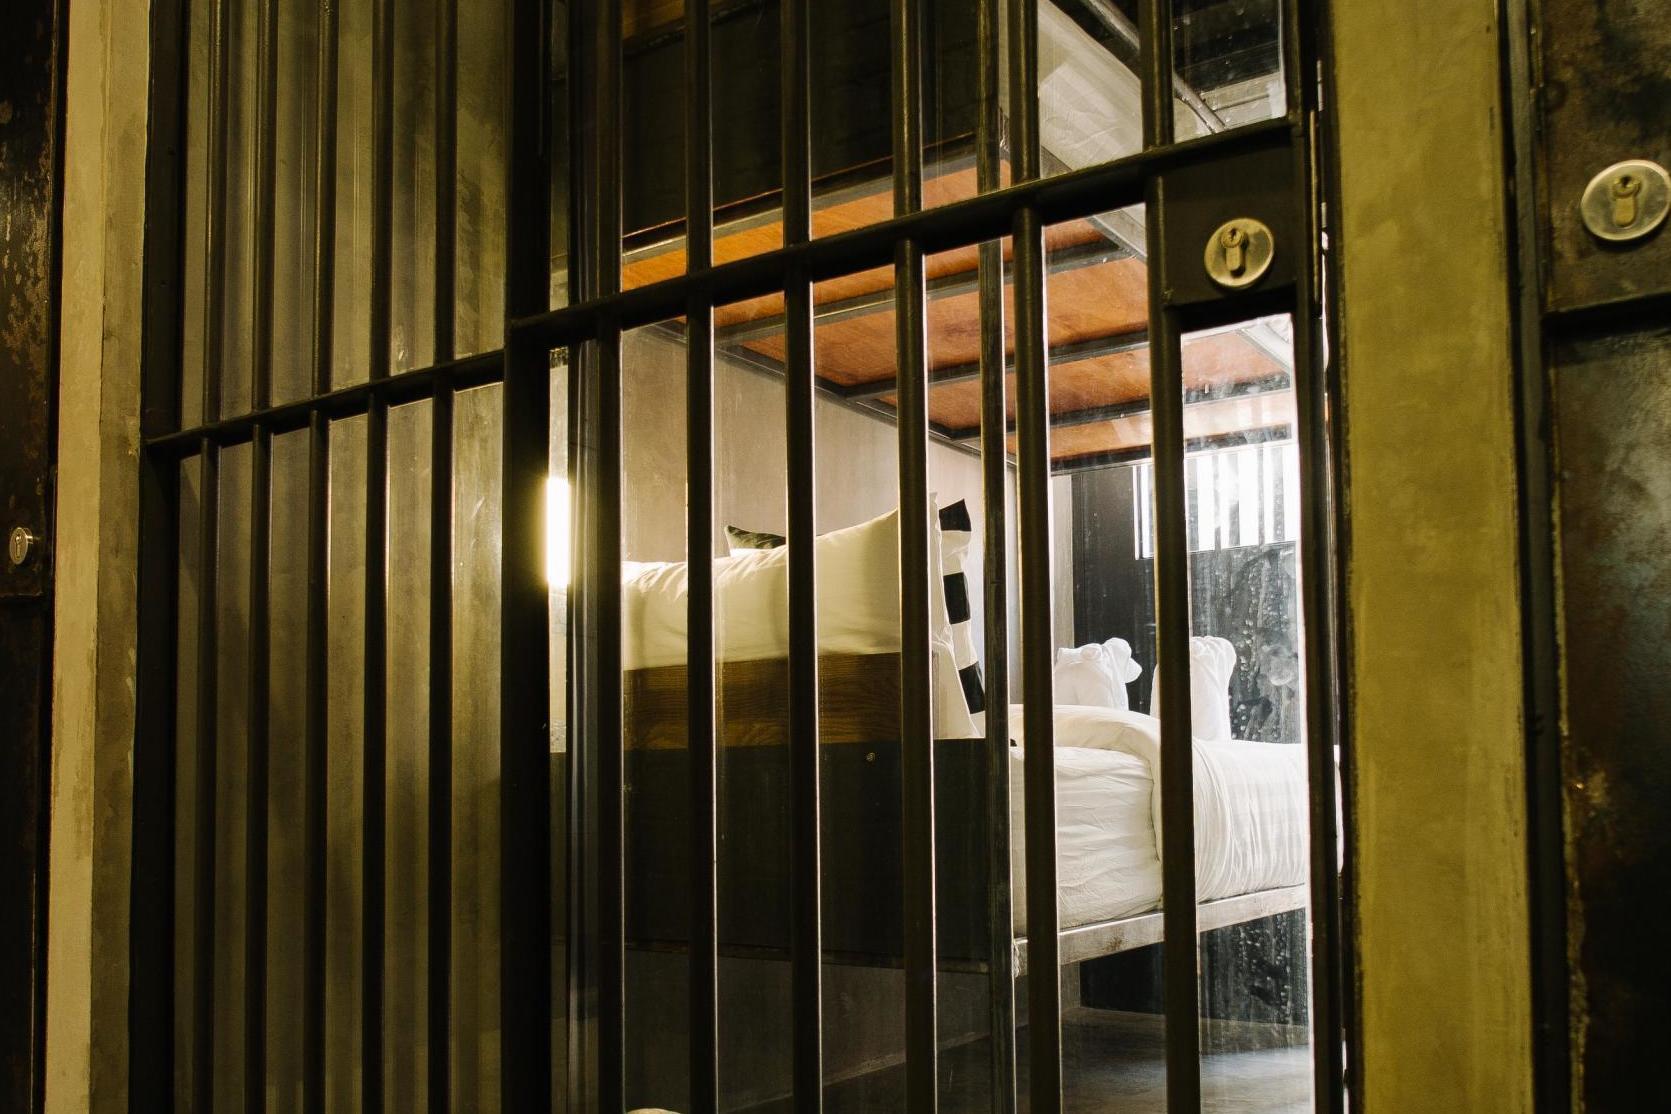 Rooms feature bunk beds, iron bars and metal doors